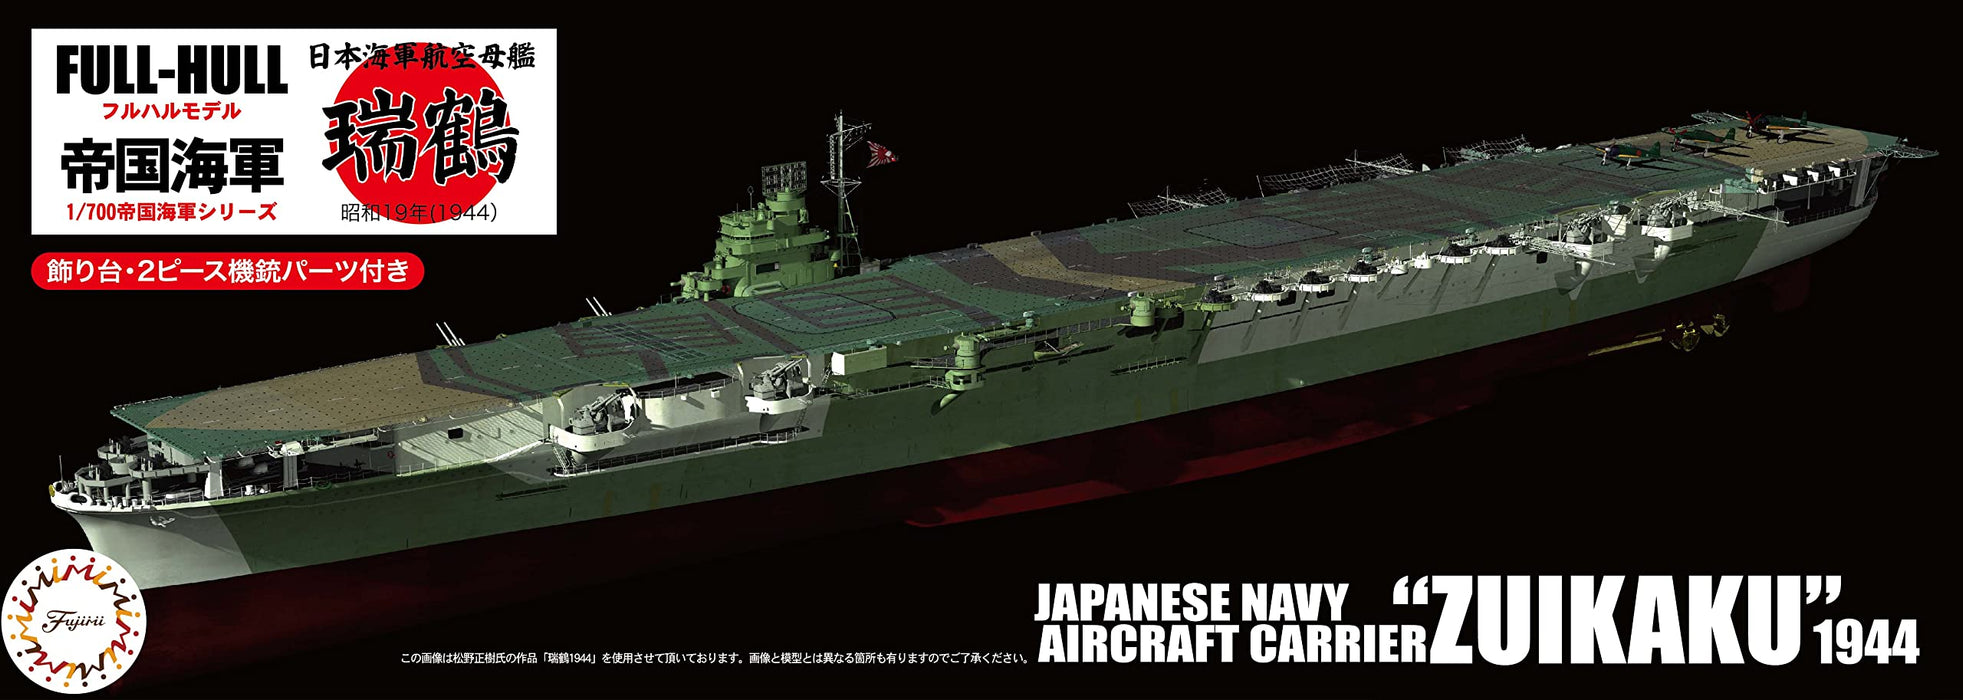 1/700 IJN Aircraft Carrier Zuikaku Full Hull Model Special Ver. Kit FH-20 EX-1_3